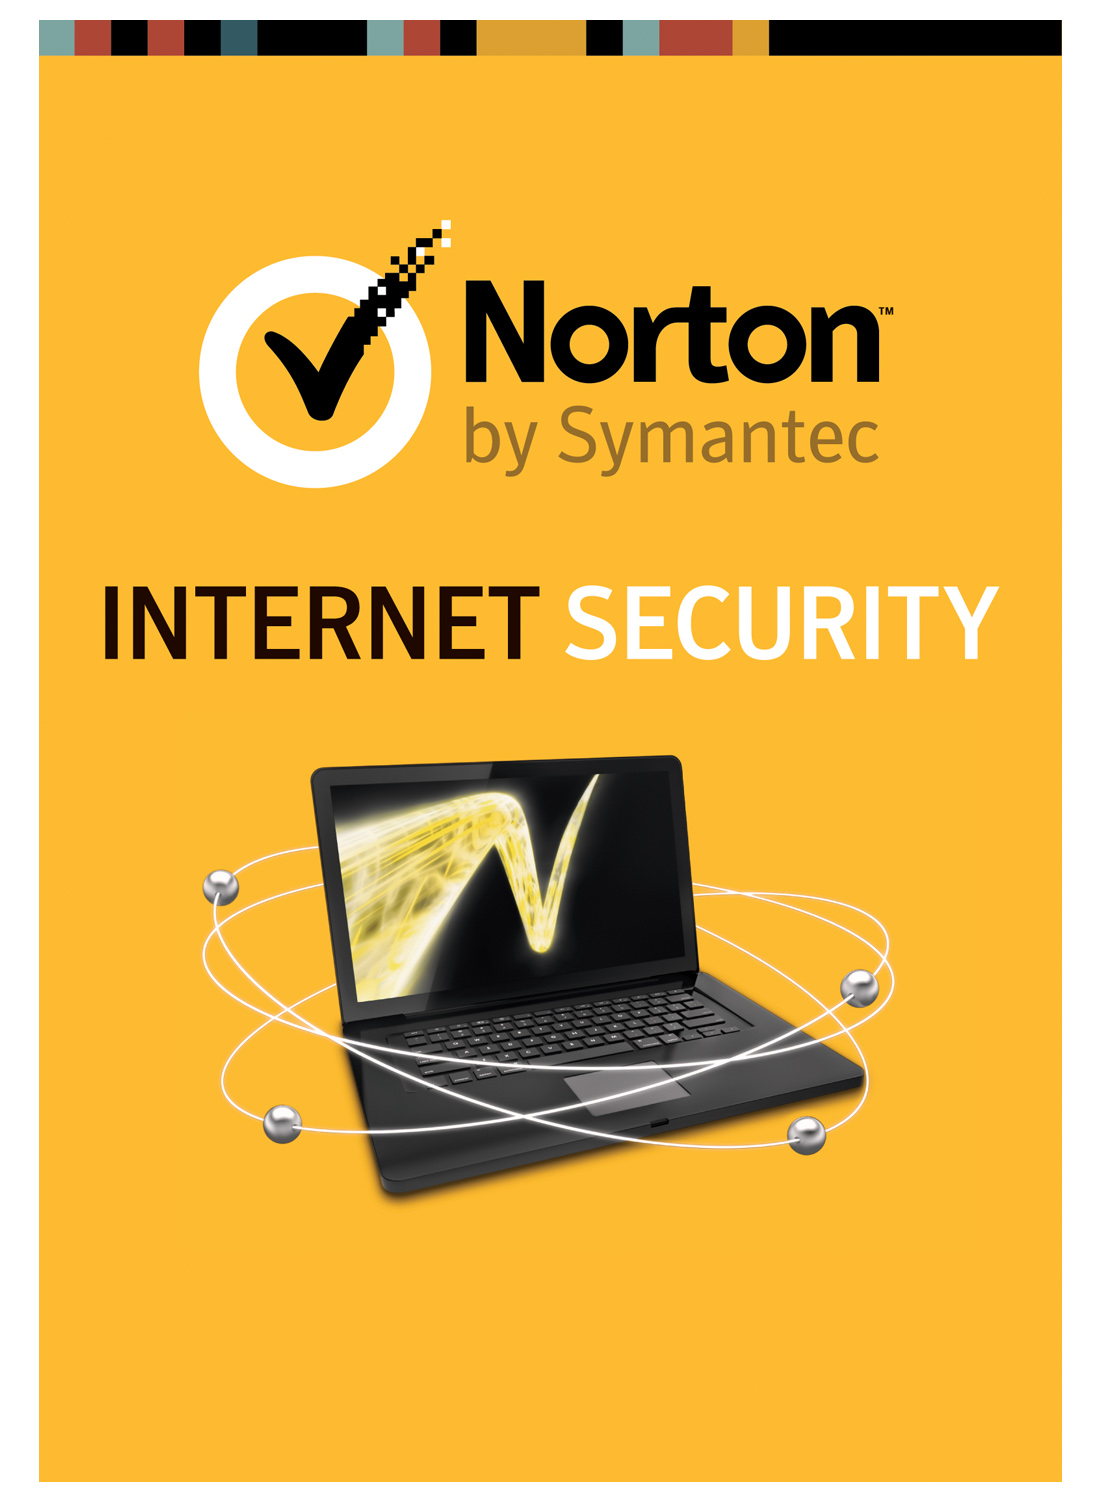 Download Norton Internet Security 2014 free